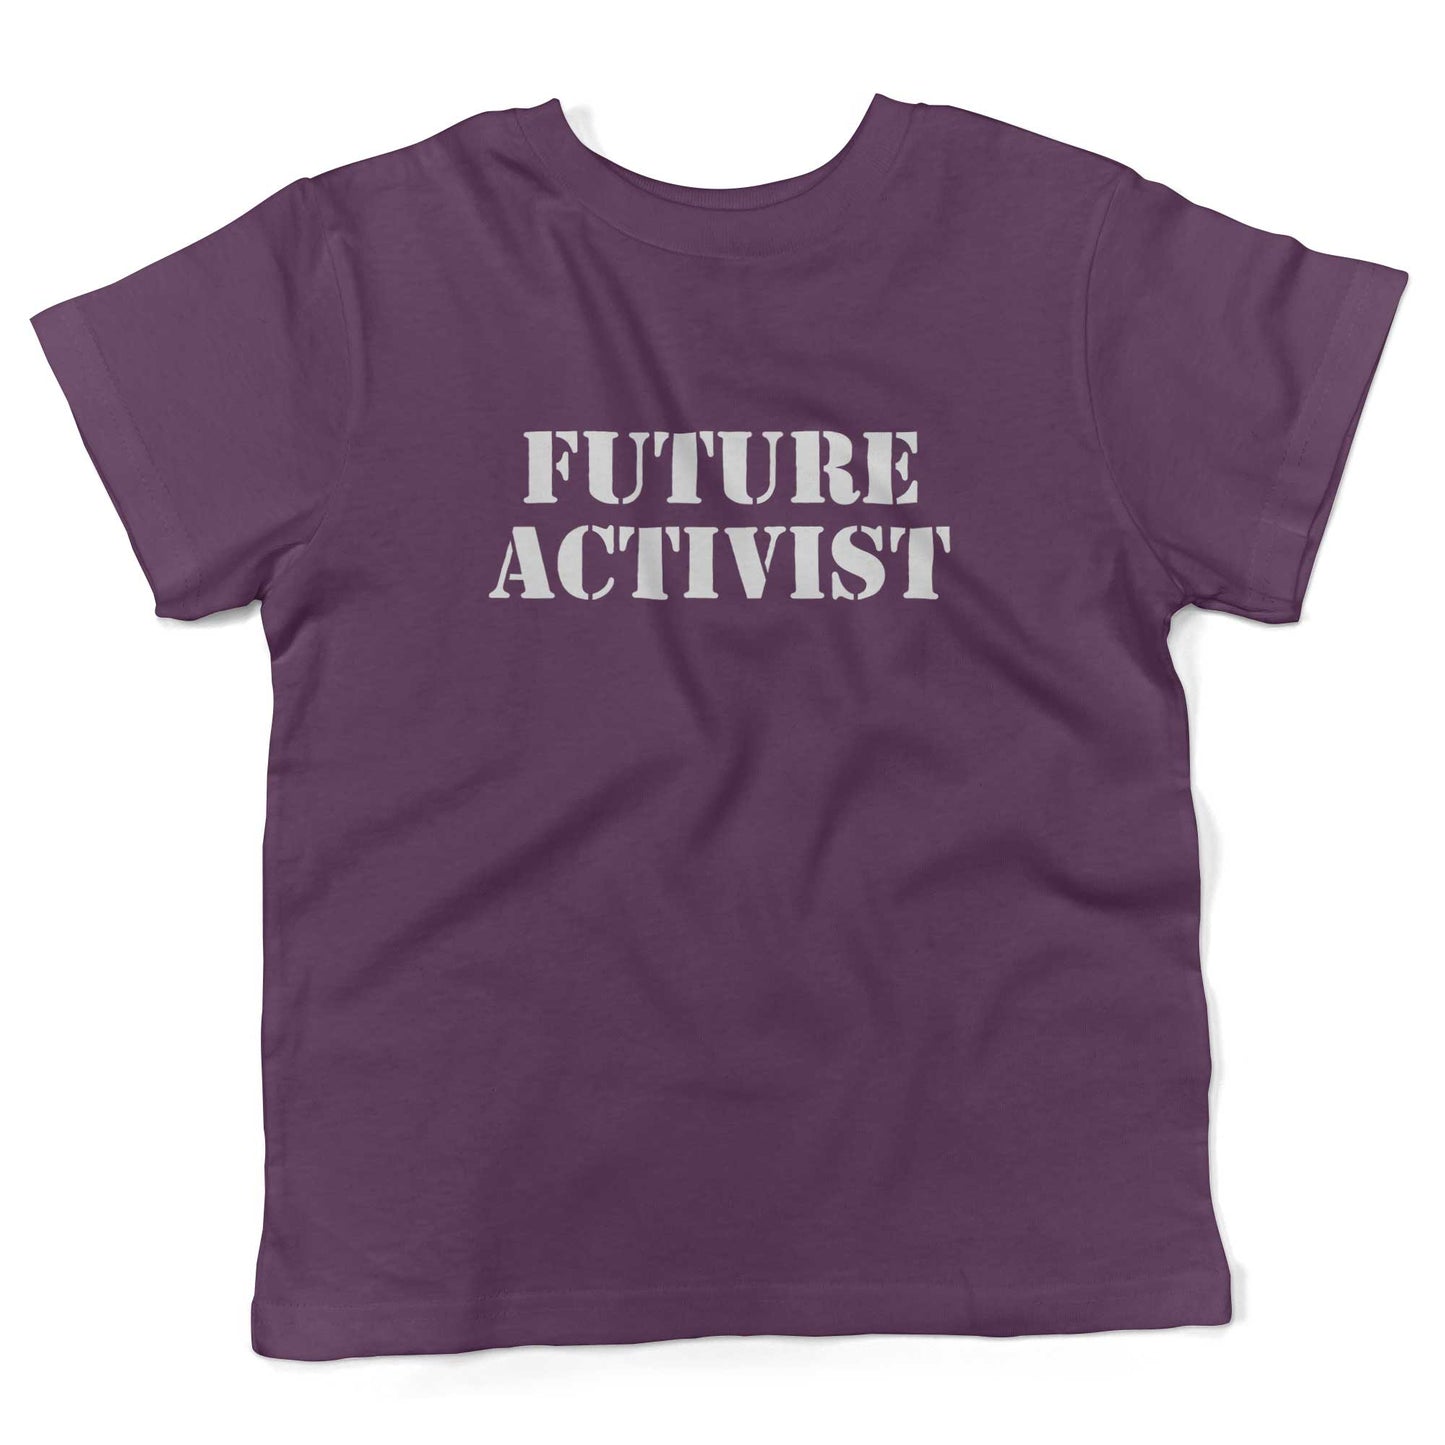 Future Activist Toddler Shirt-Organic Purple-2T